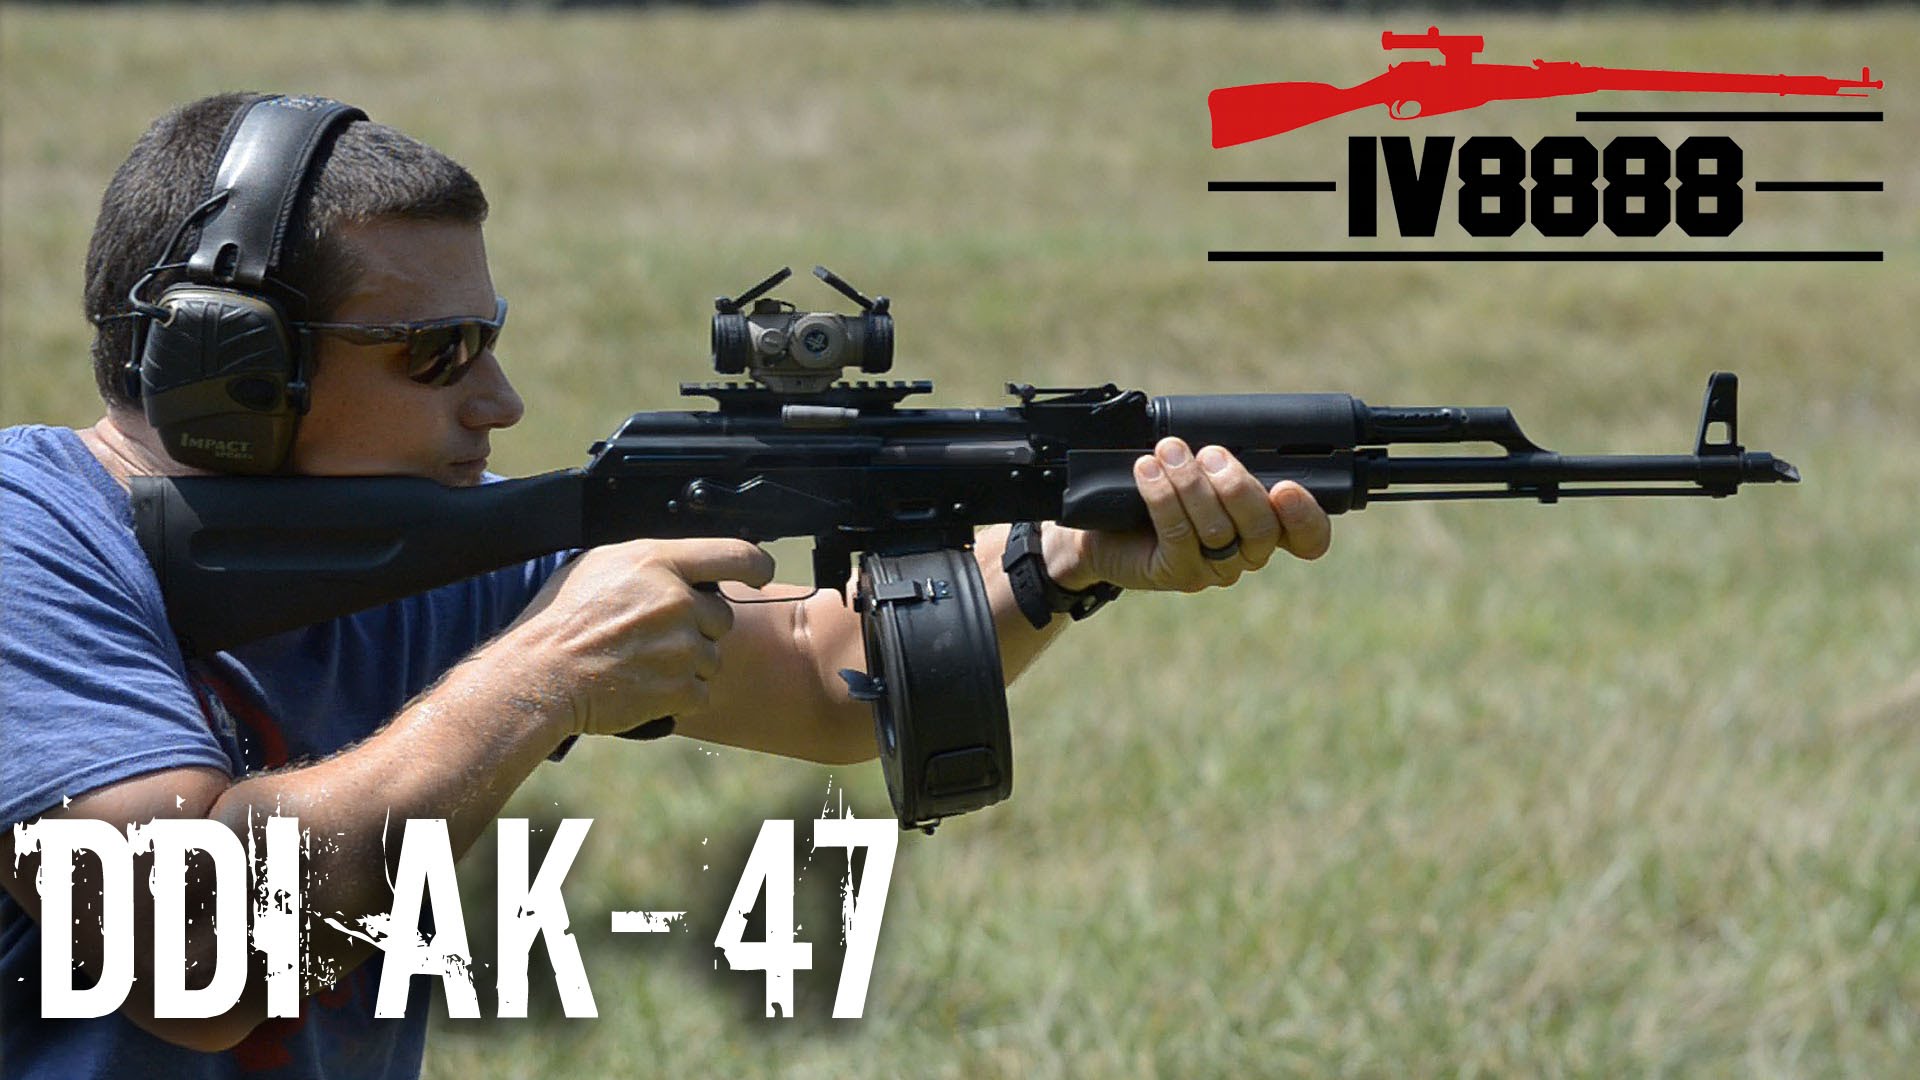 DDI AK-47 First Look.